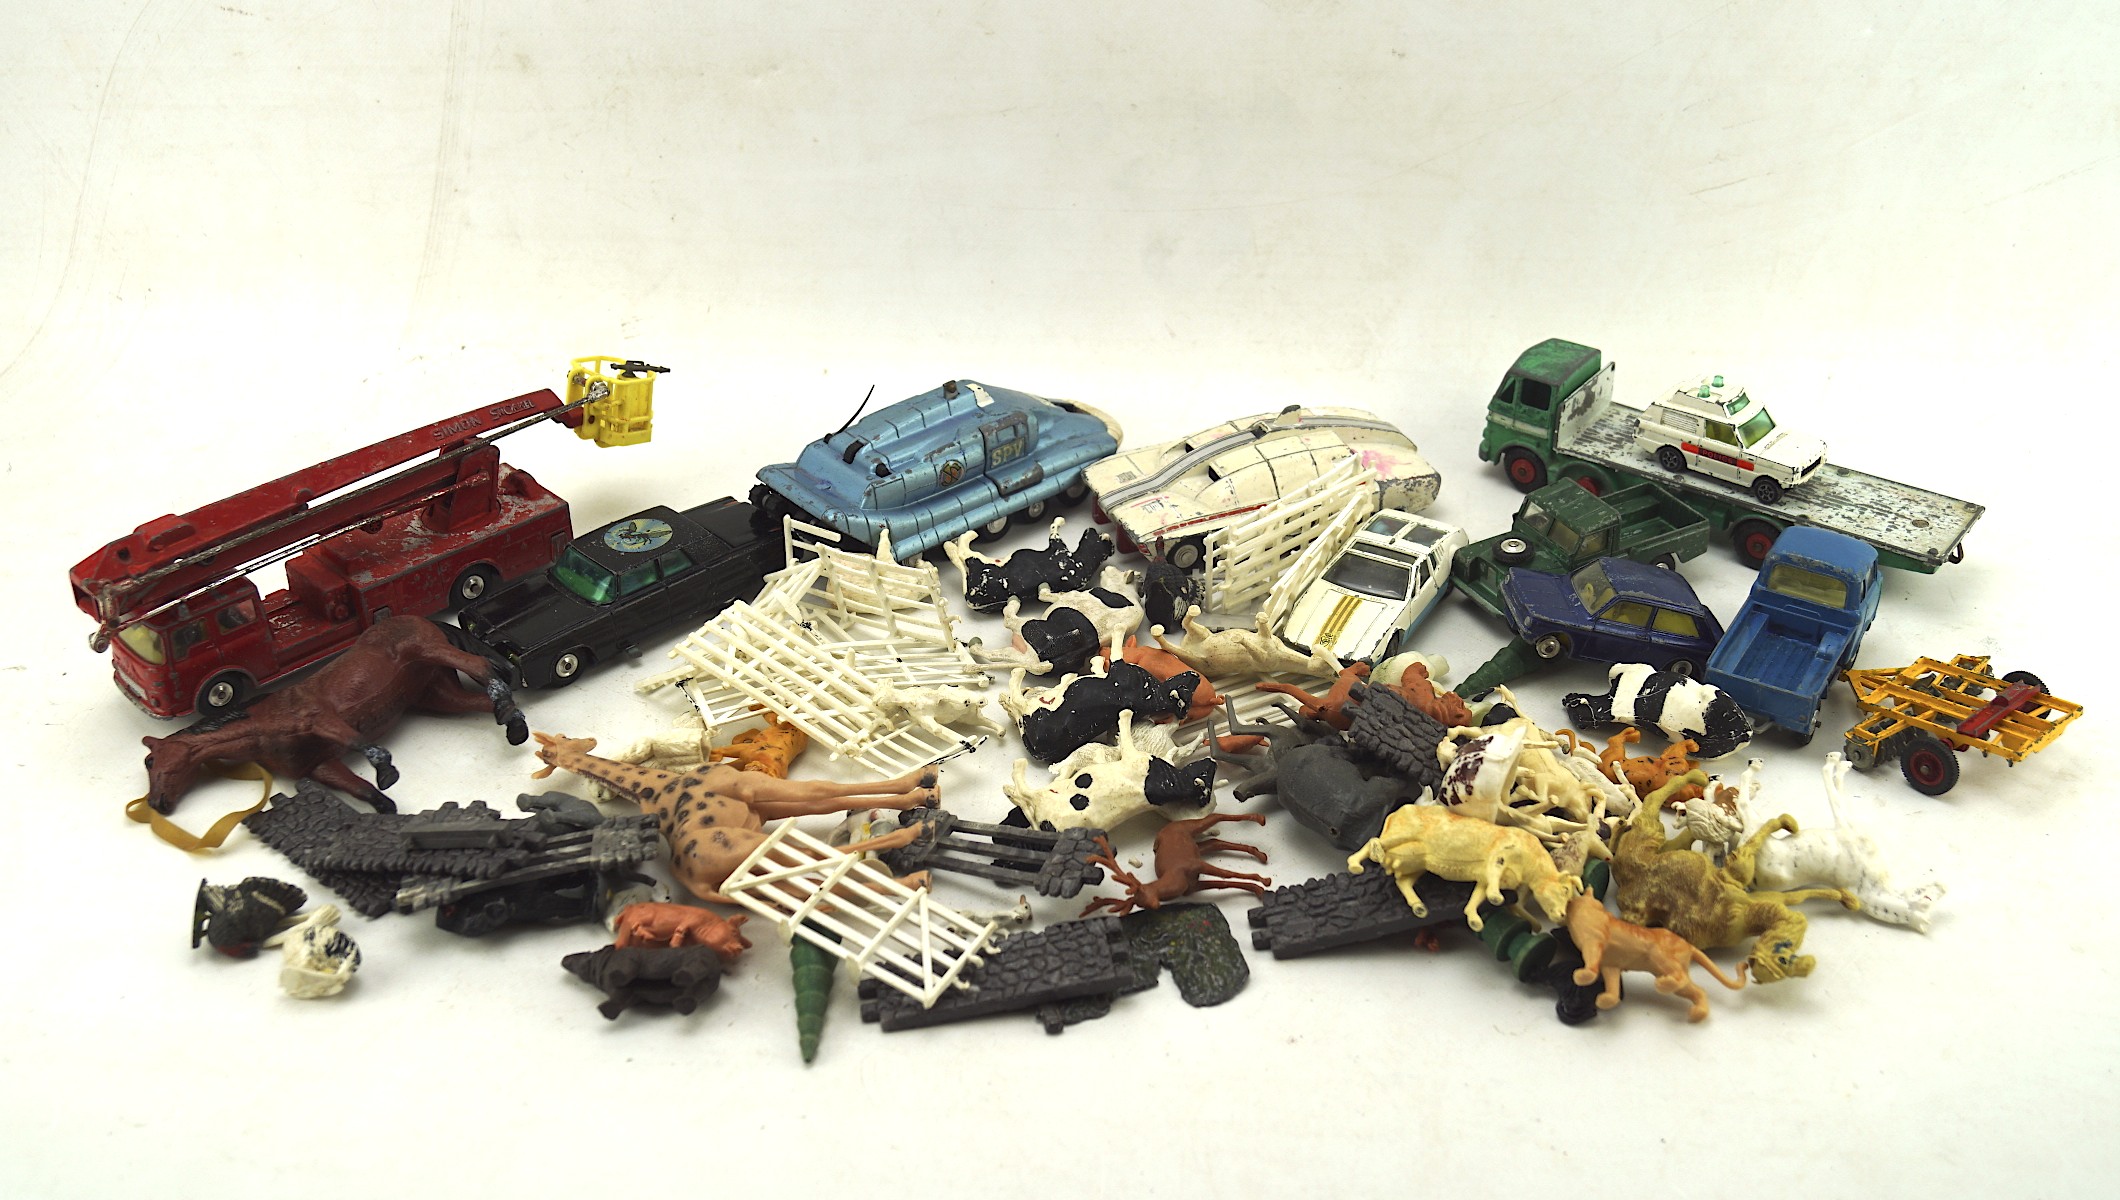 An assortment of play worn toys,